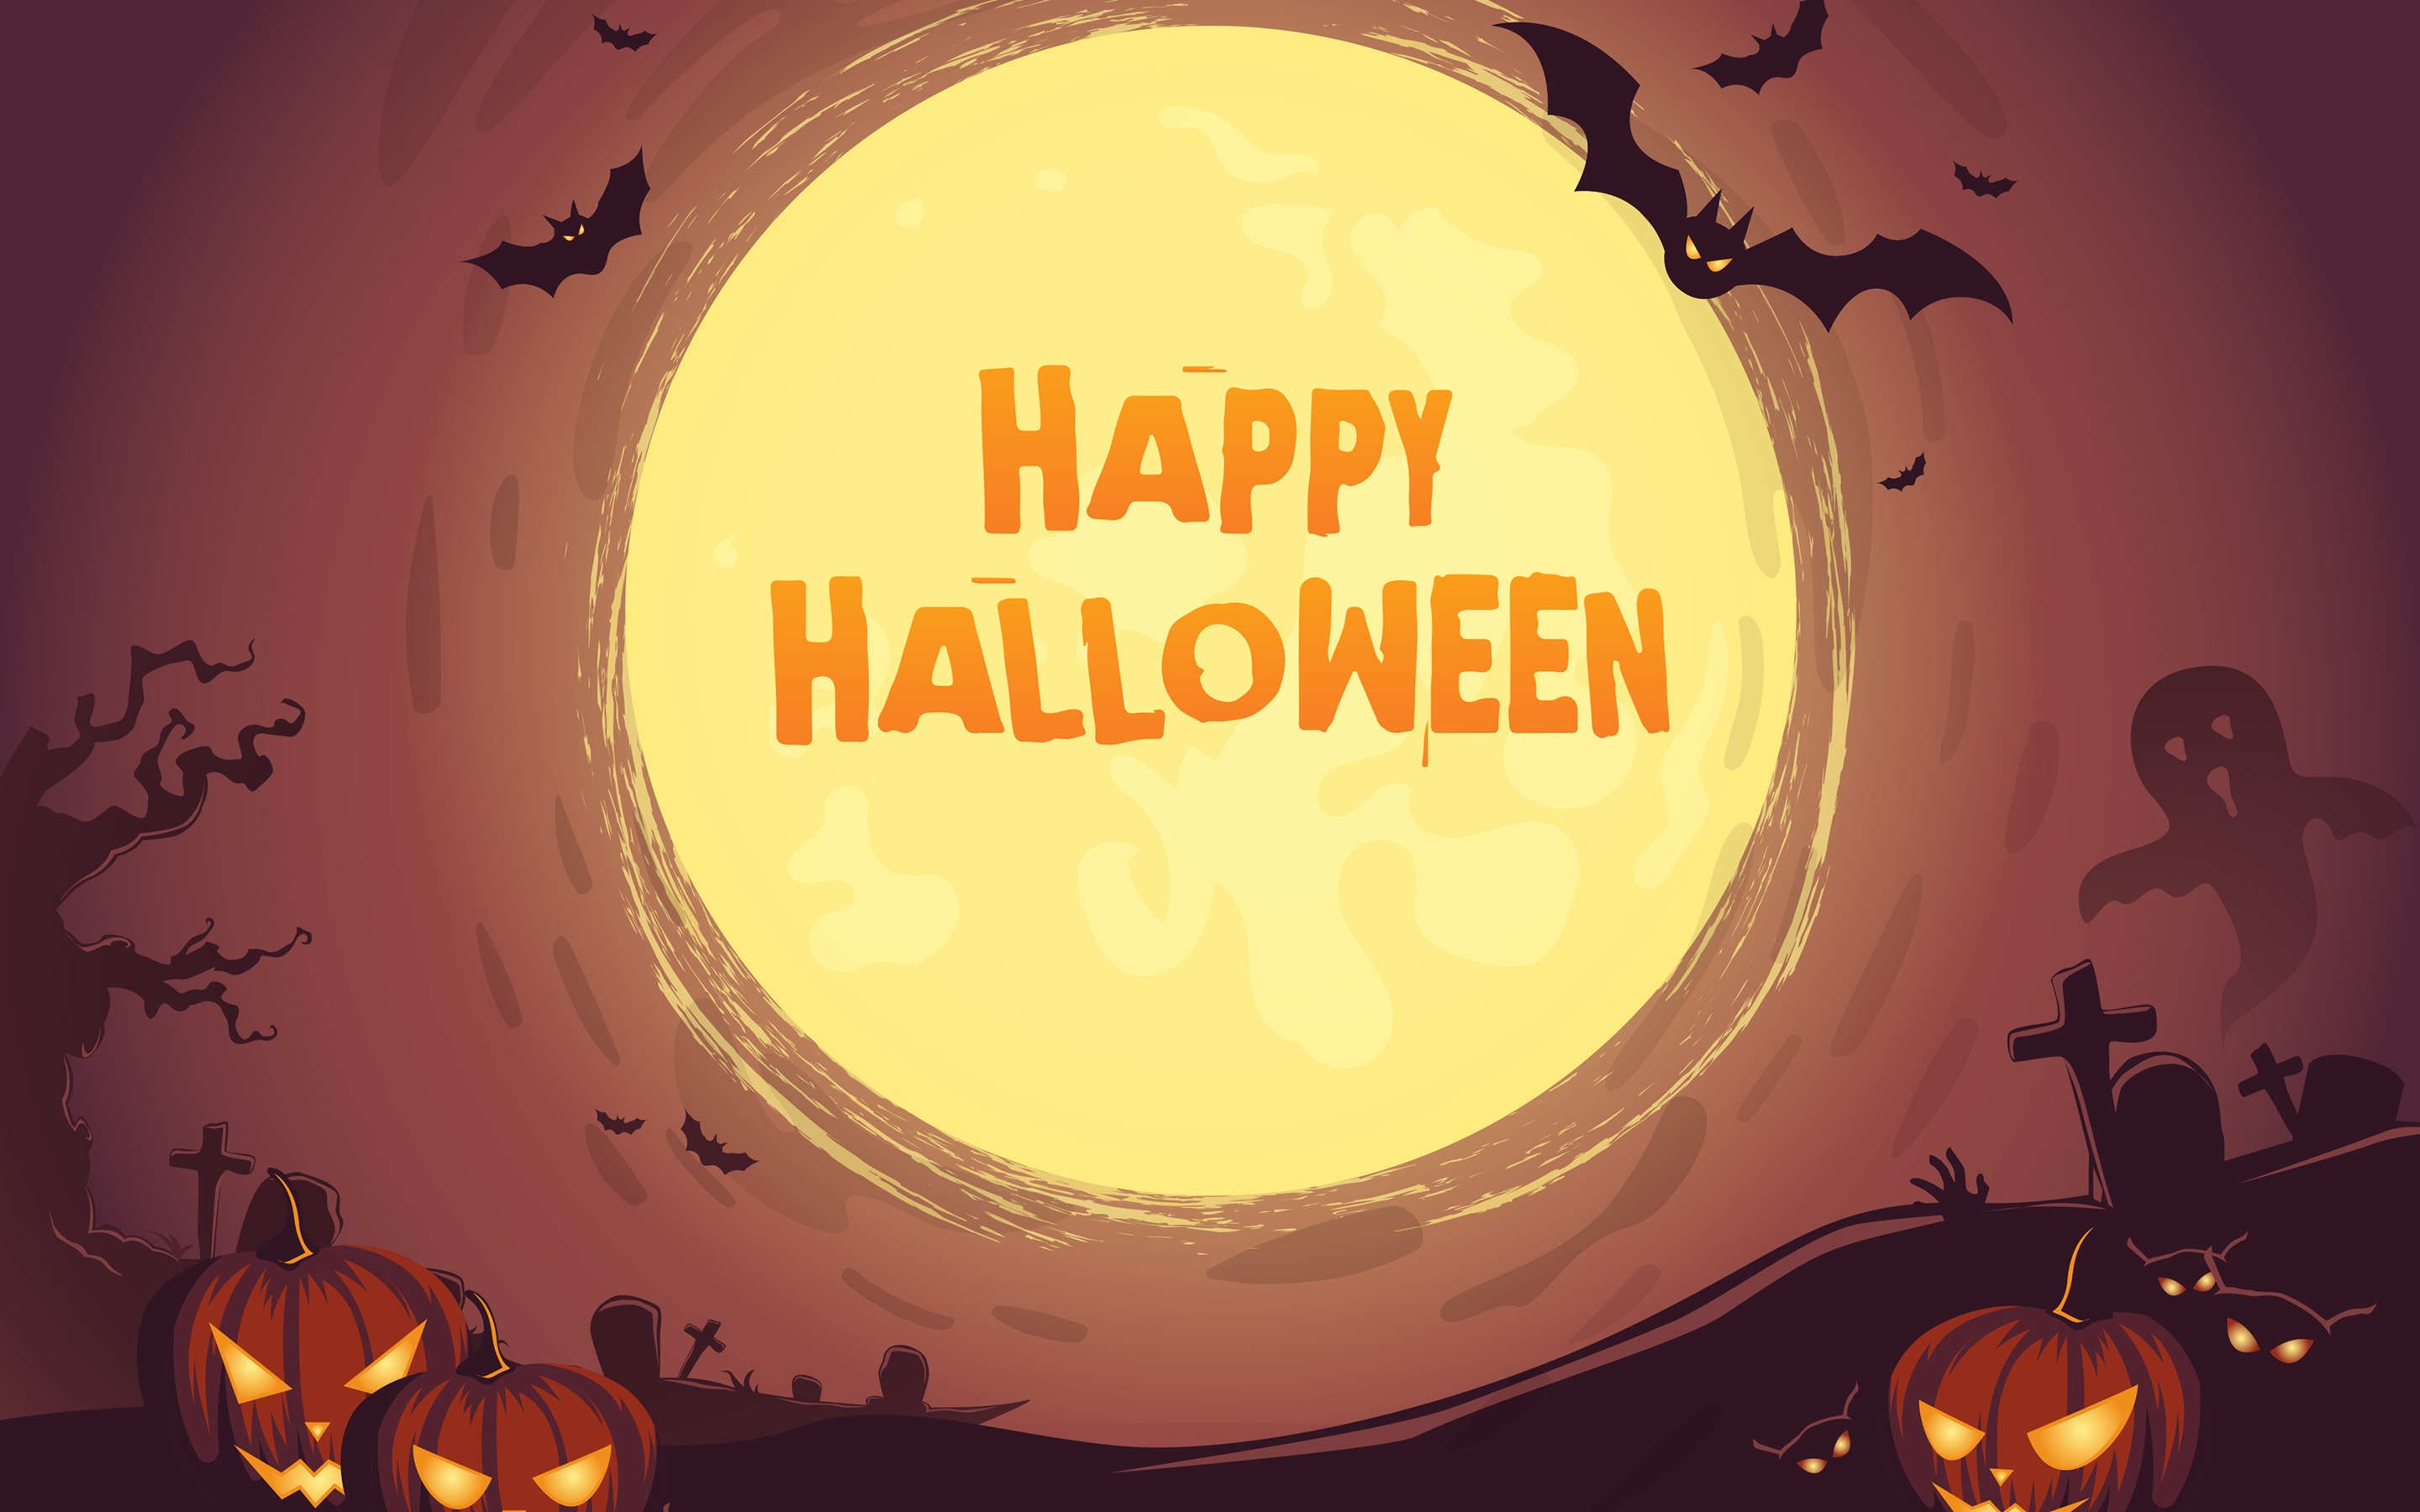 Download wallpaper Happy Halloween, moon, night, pumpkin, bat, creative, Halloween Party for desktop with resolution 2880x1800. High Quality HD picture wallpaper